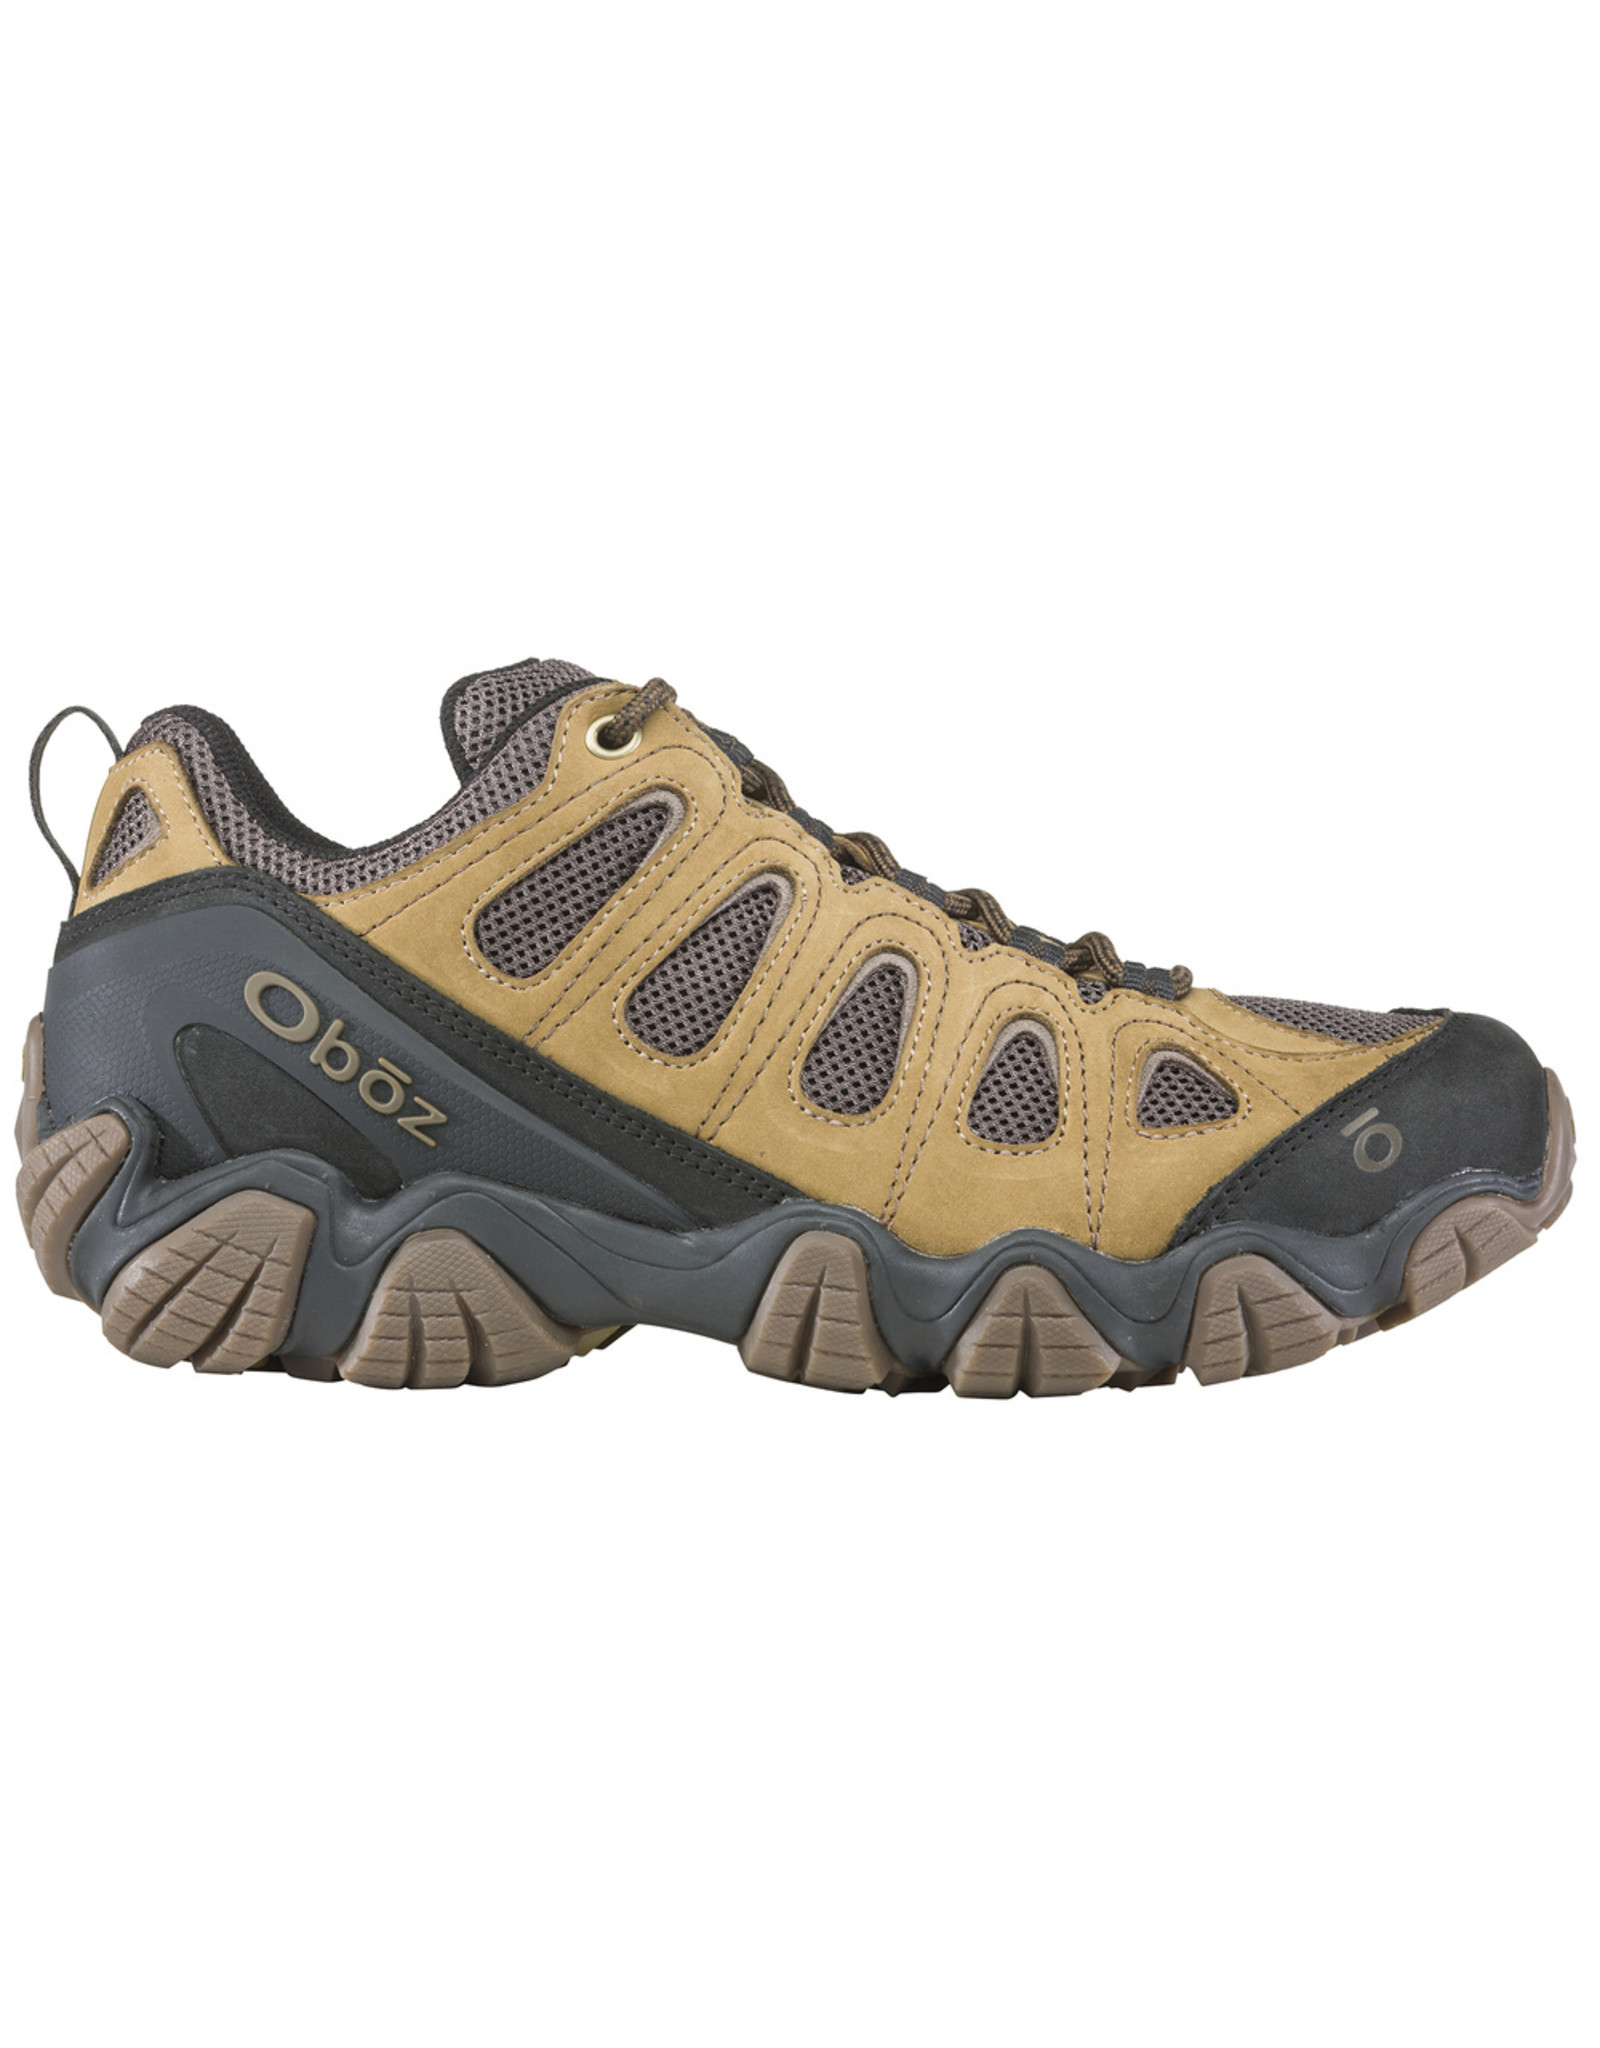 Oboz Sawtooth II Low Hiking Shoes - Men's